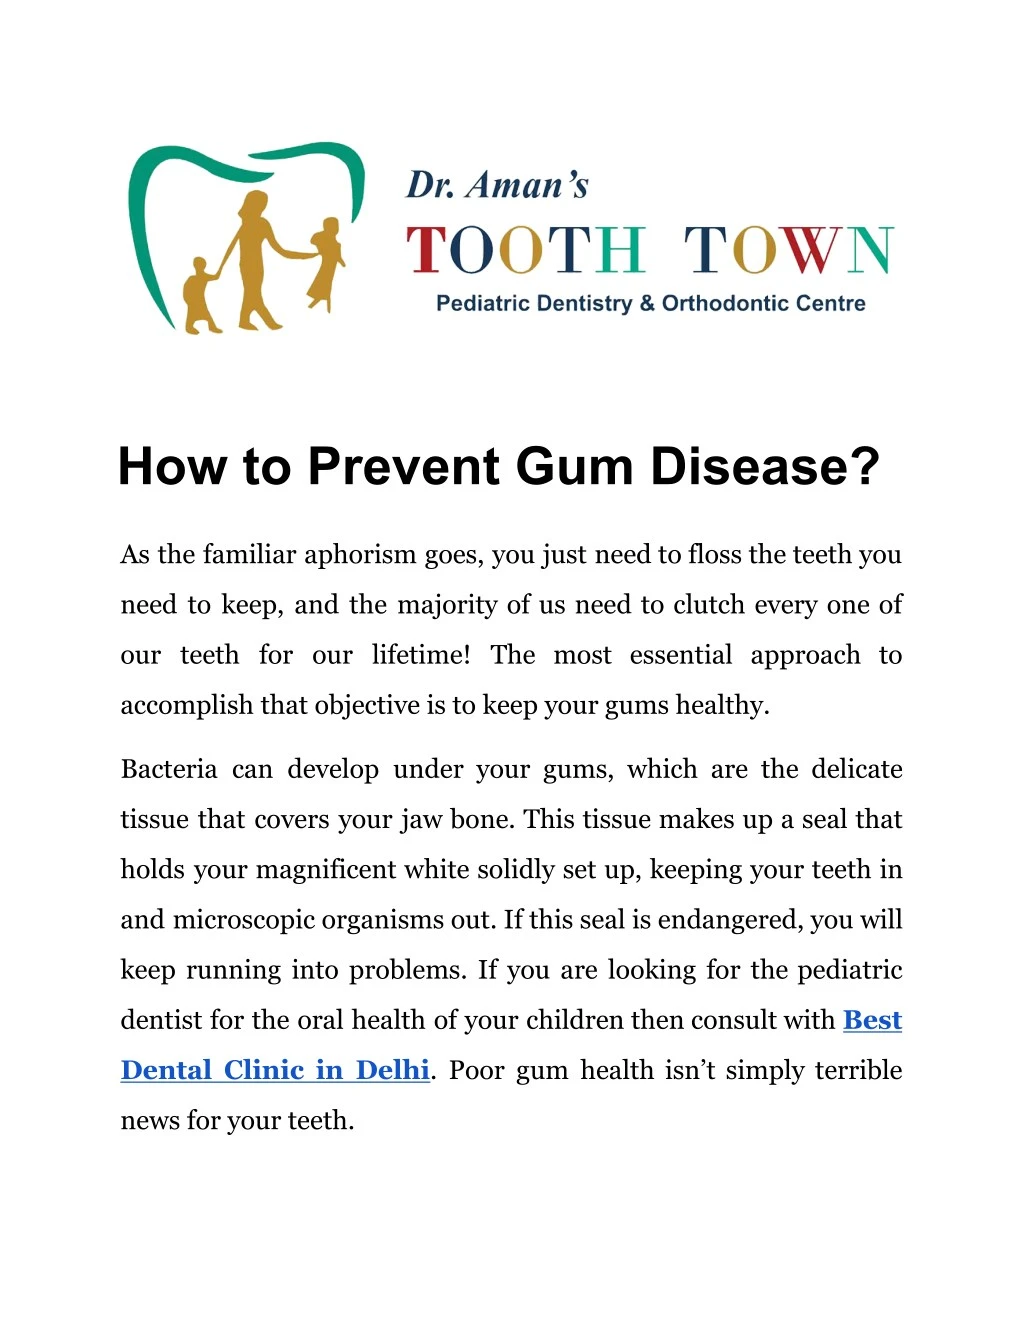 how to prevent gum disease